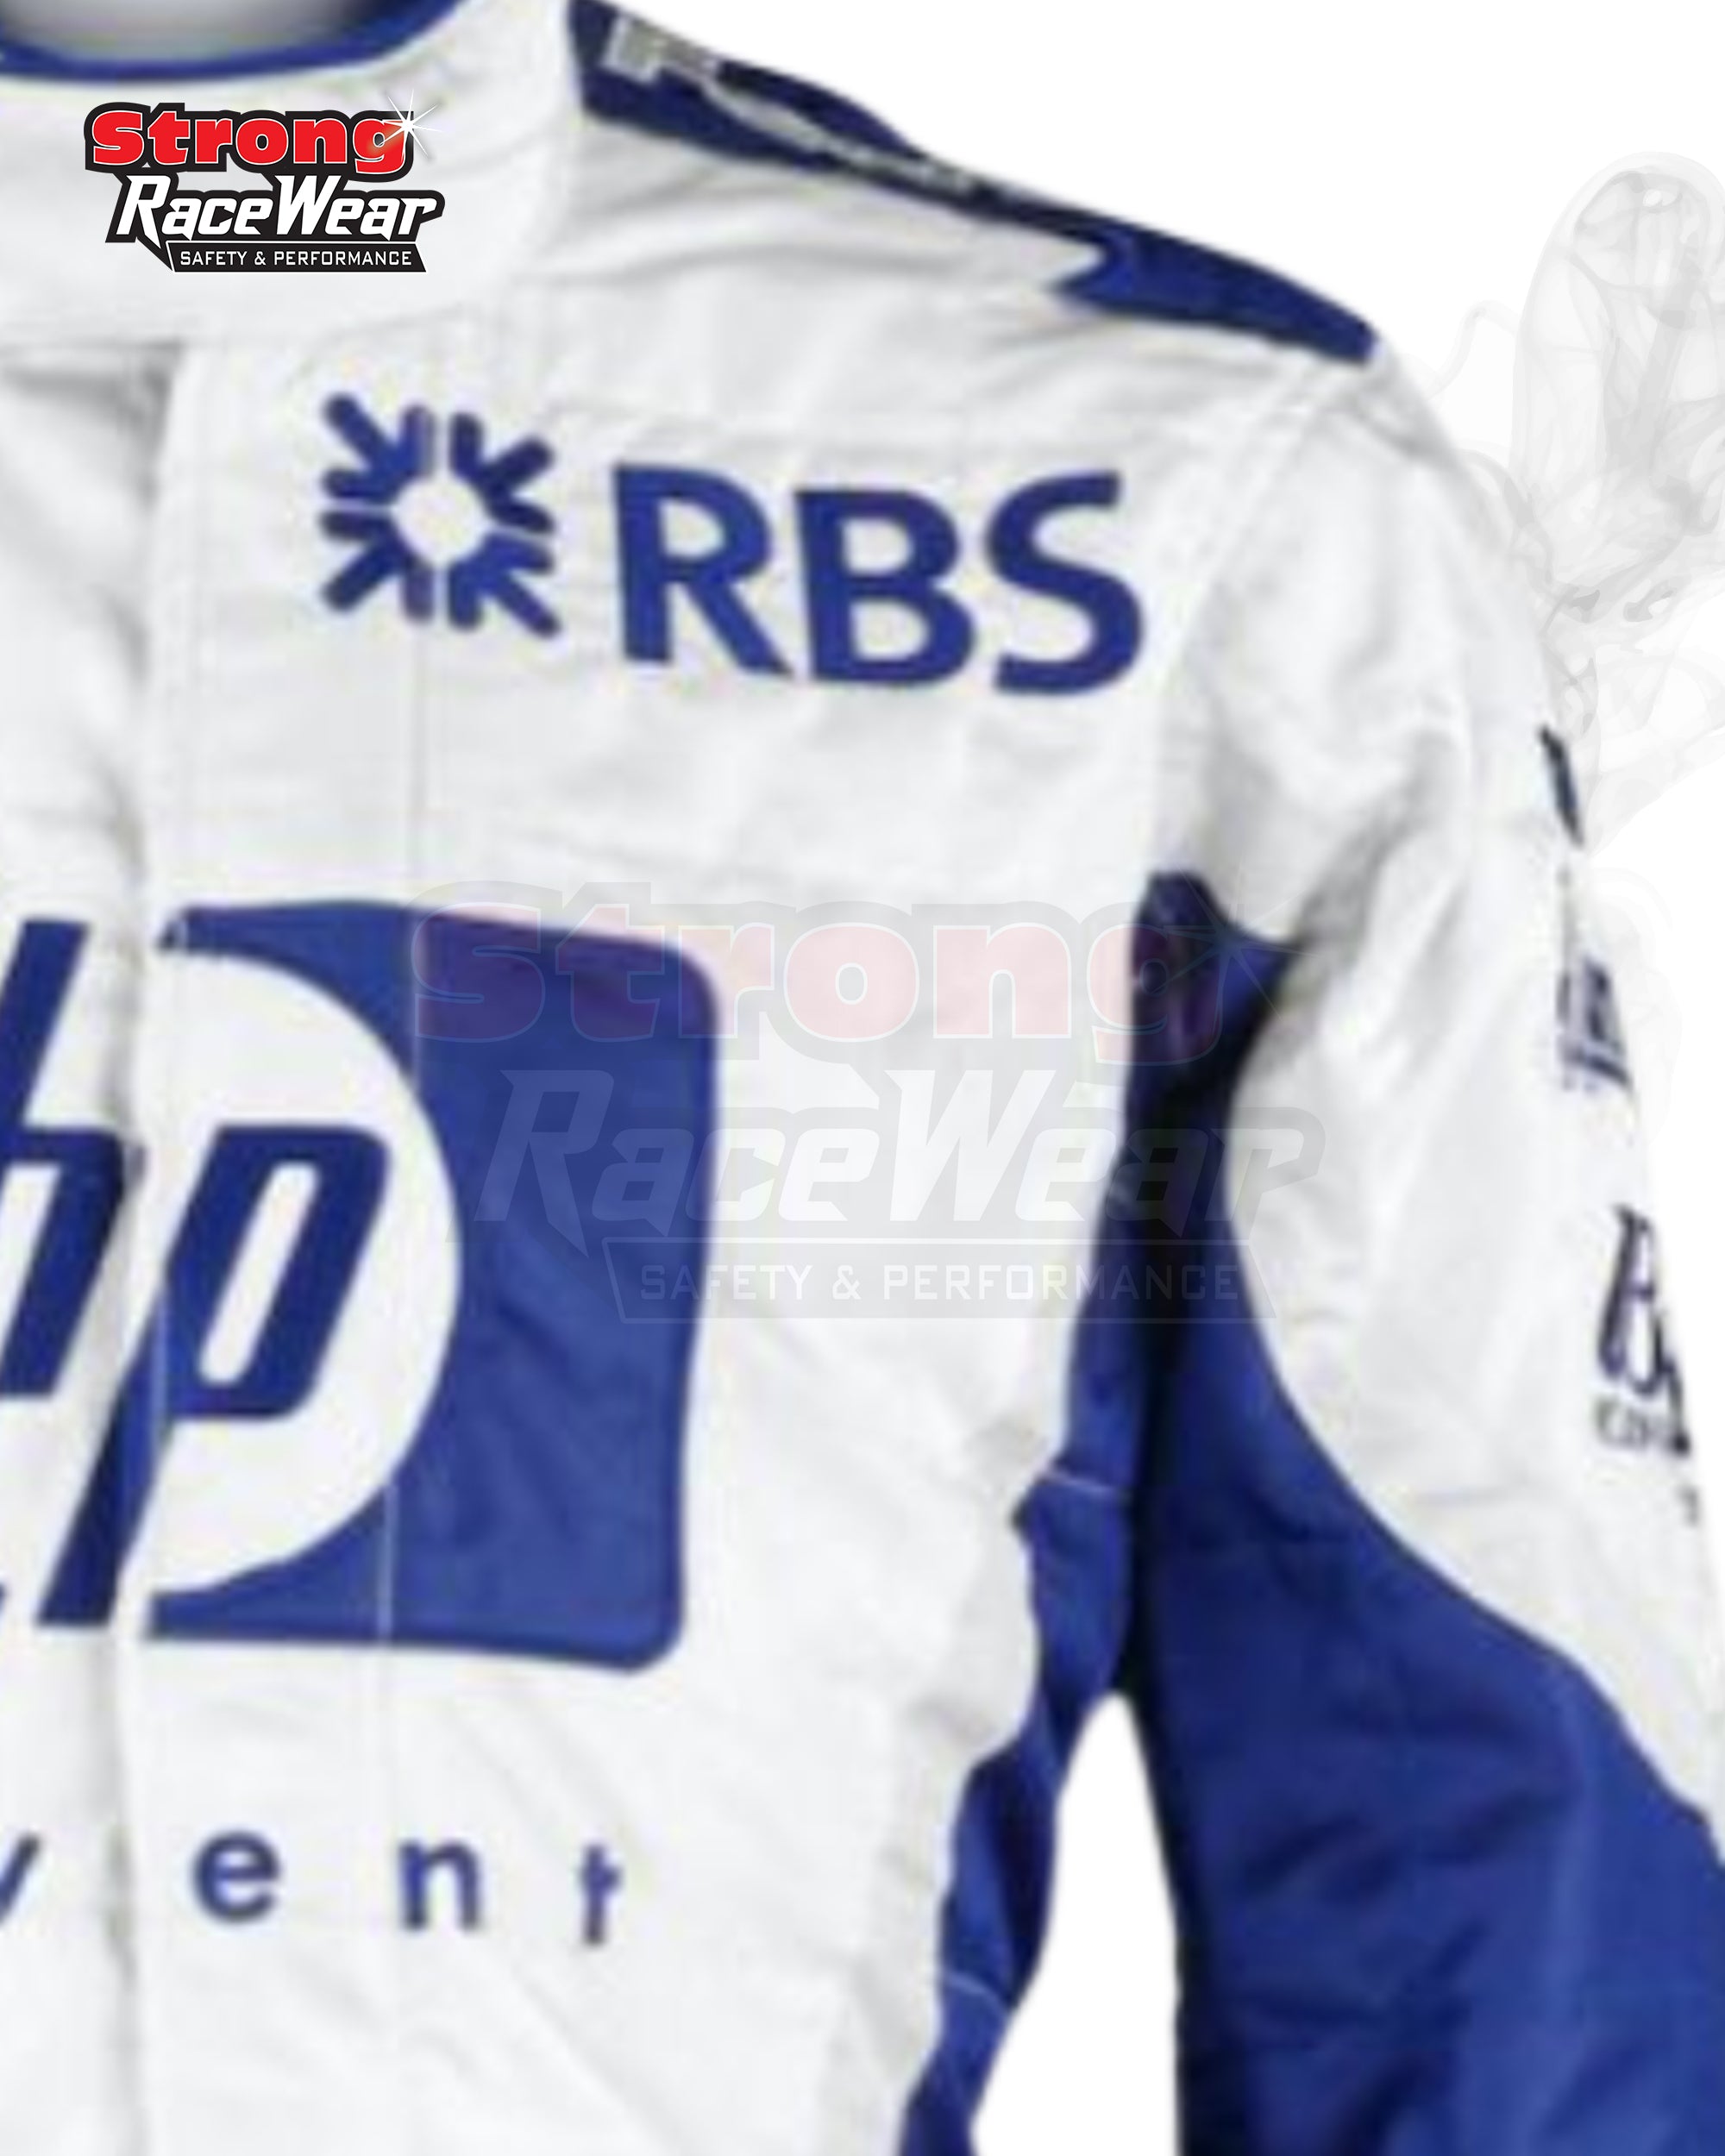 2005 Mark Webber BMW Williams F1 Racing Suit